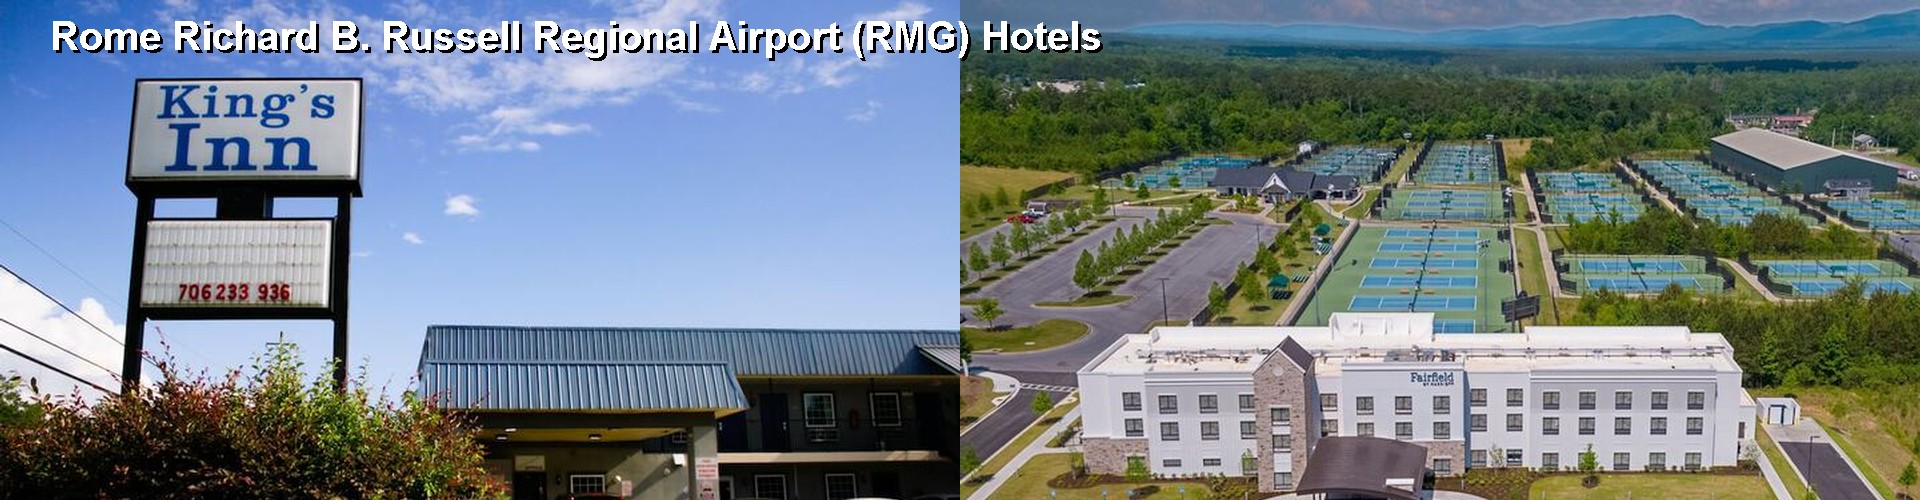 5 Best Hotels near Rome Richard B. Russell Regional Airport (RMG)